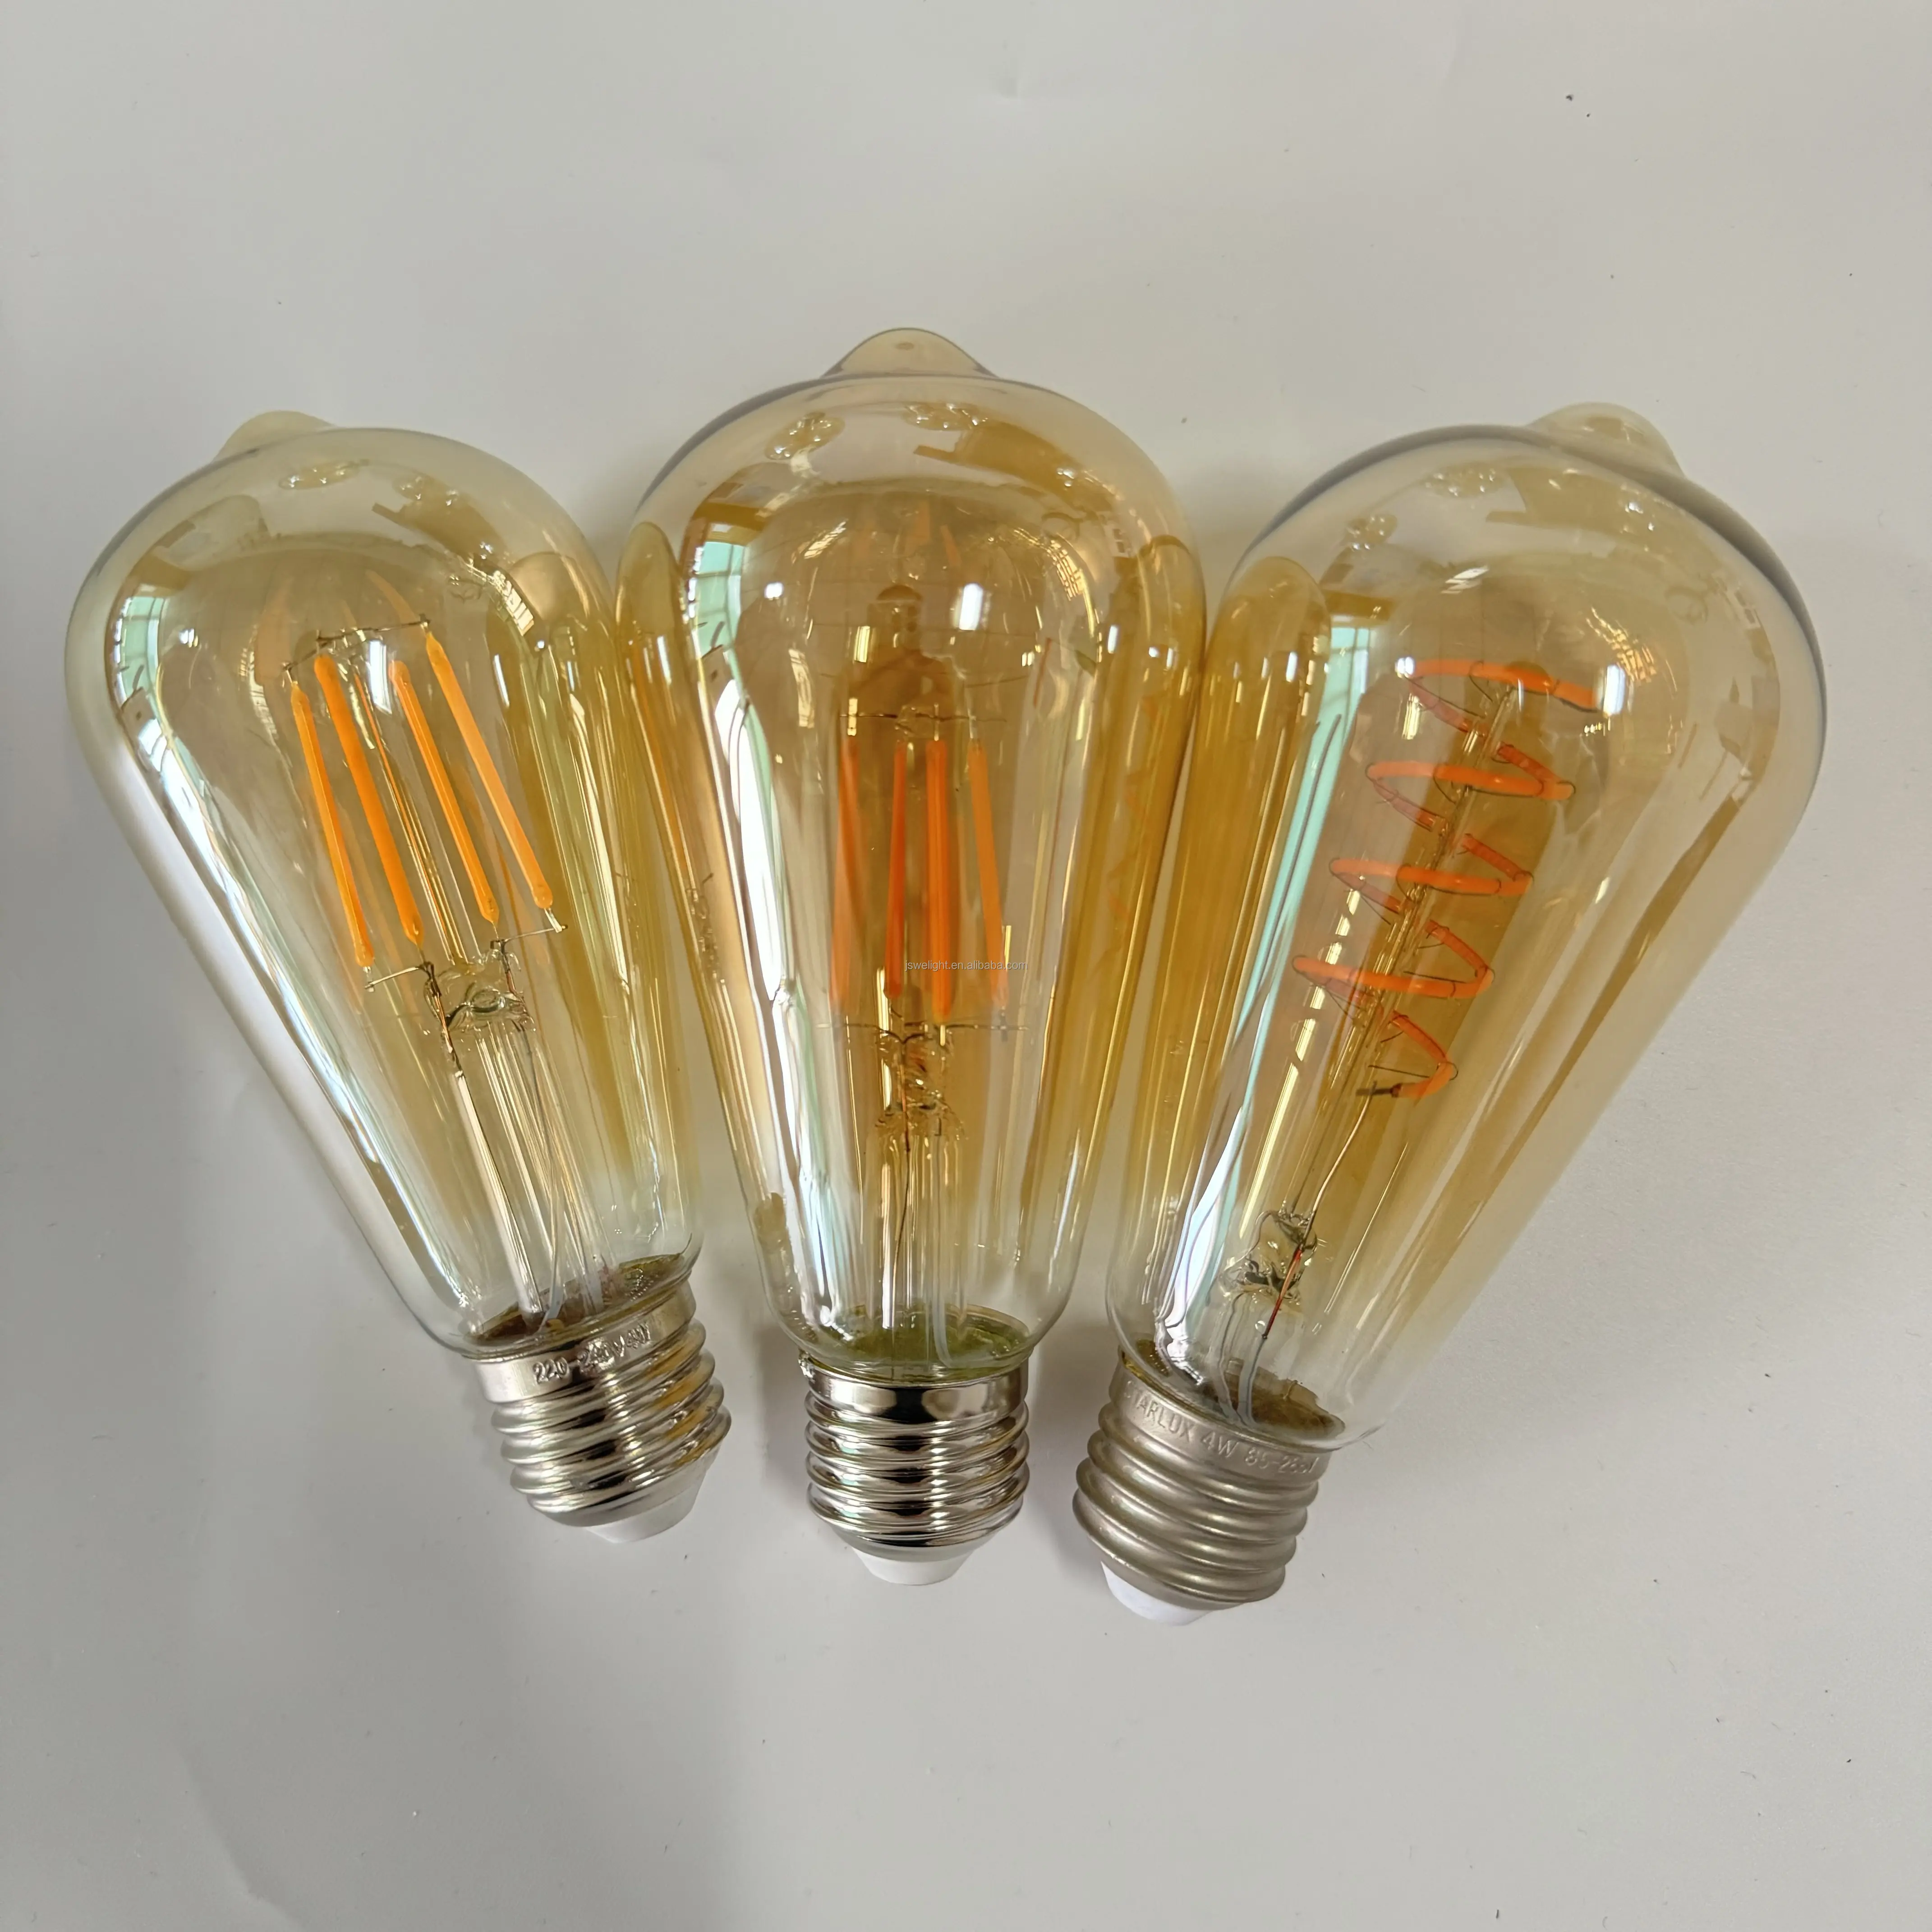 Aydınlatma dekorasyon Led Vintage Vintage cam güç tasarruflu lambalar 220V 110V 4W 6W E26 E27 LED filament ampul ışıkları